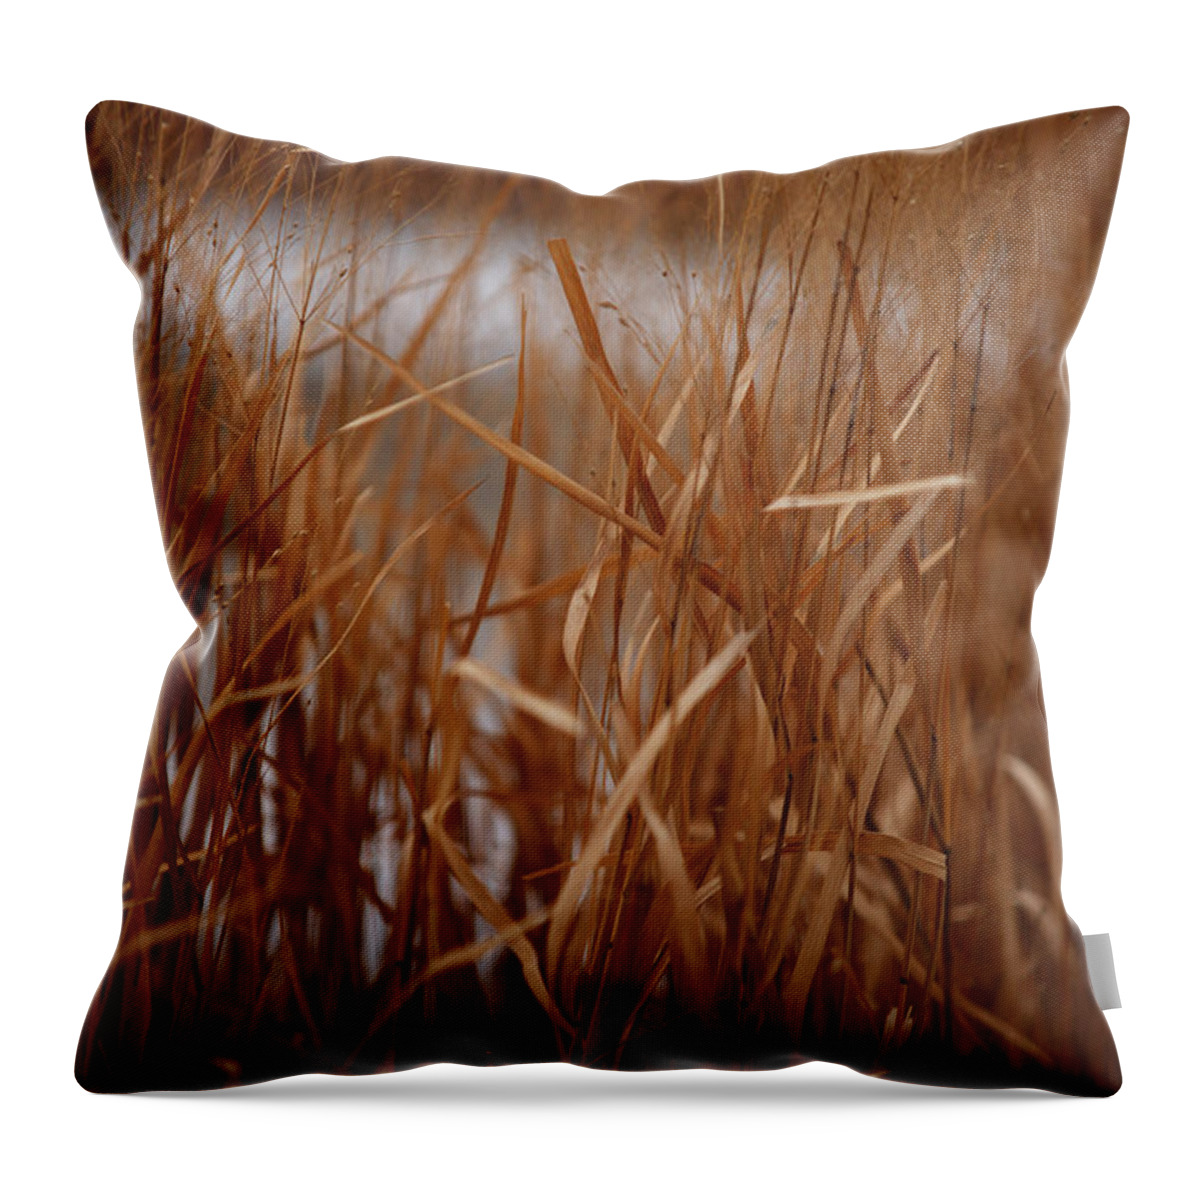 Grass Throw Pillow featuring the photograph Winter Grass - 1 by Linda Shafer